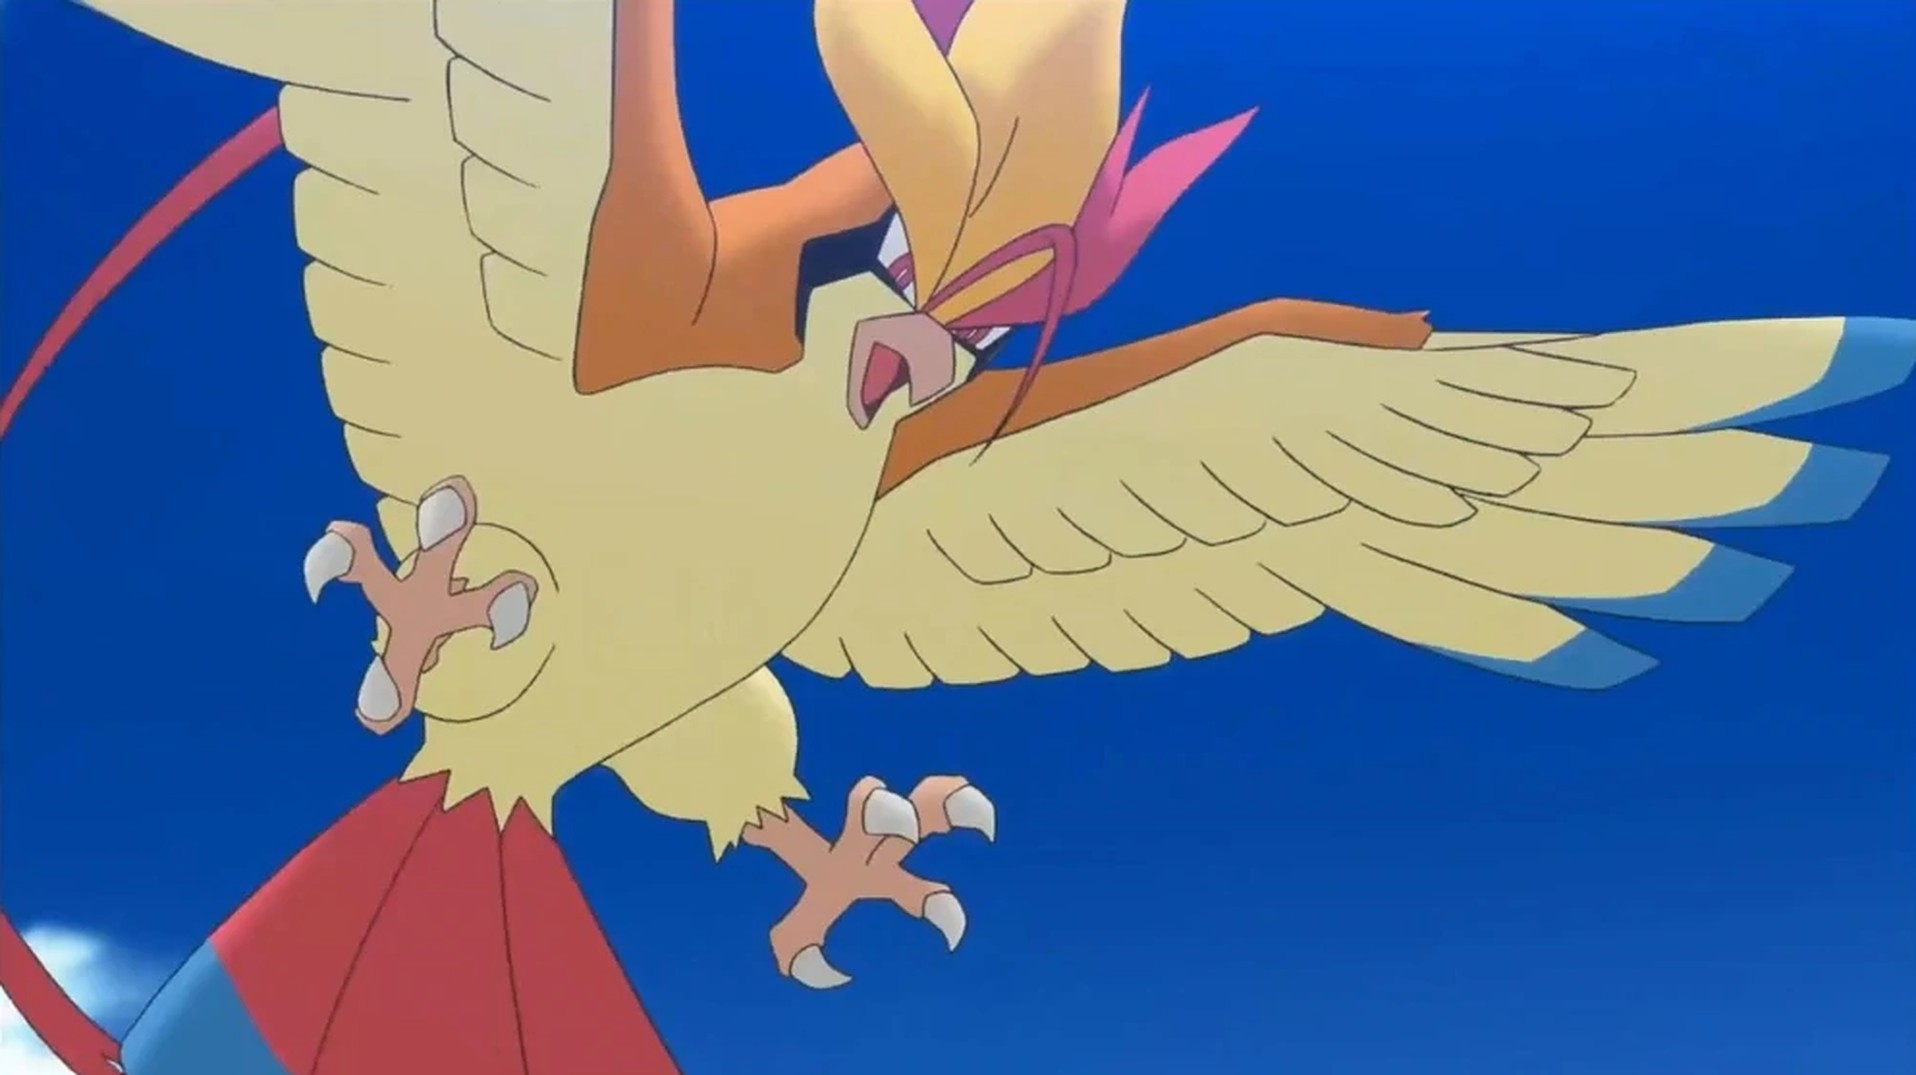 Pidgeot is one of the best flying type pokémon in Pokémon Go